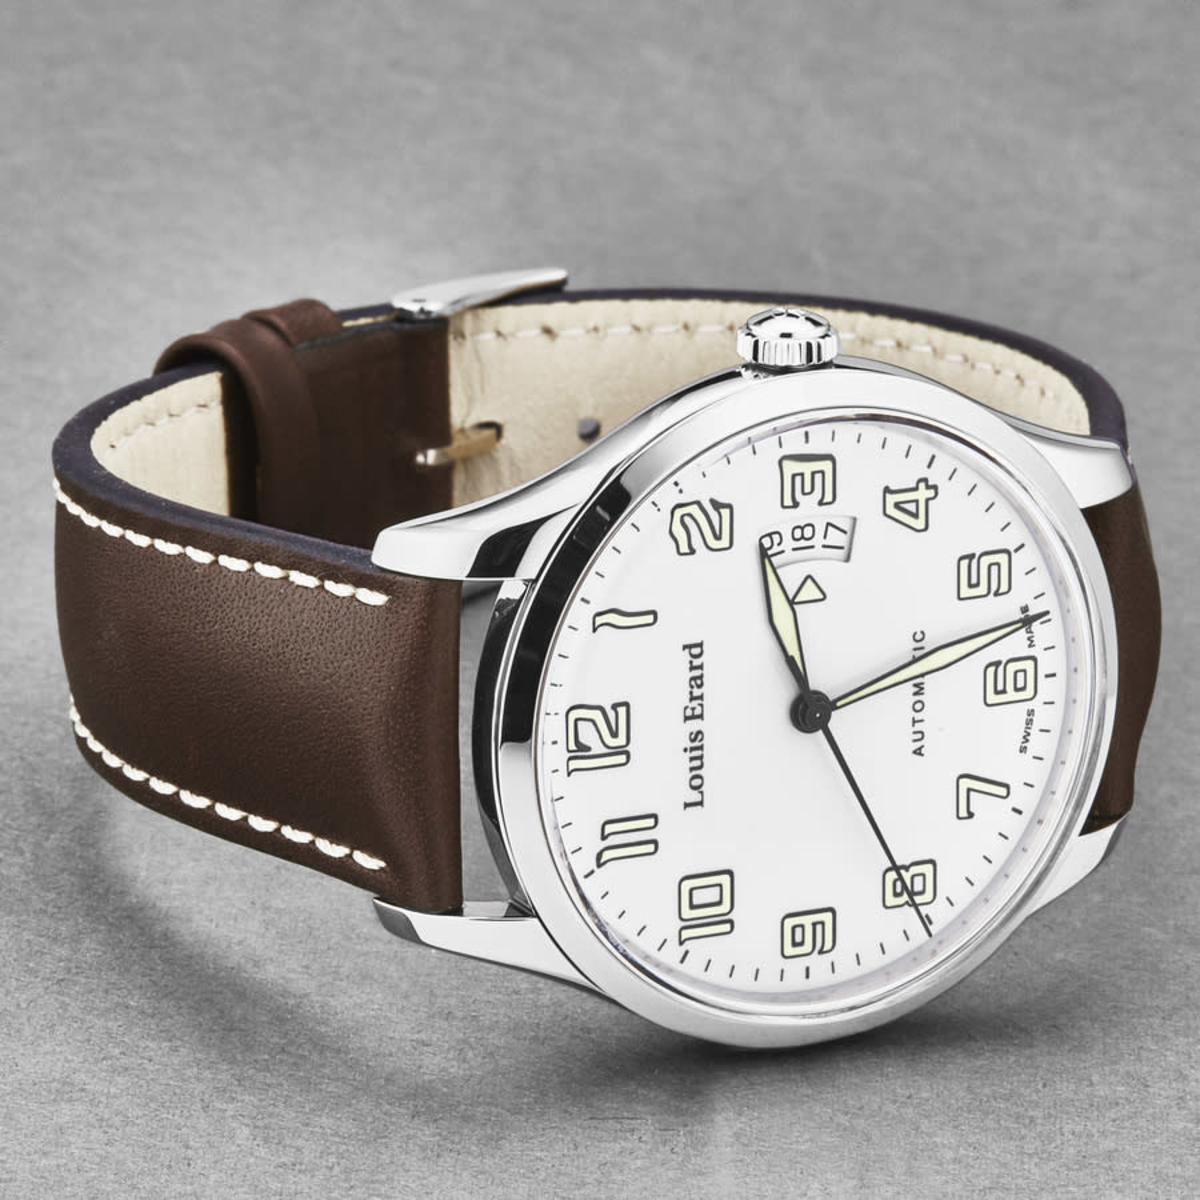 Louis Erard Heritage Automatic Diamond Black Dial Men's Watch